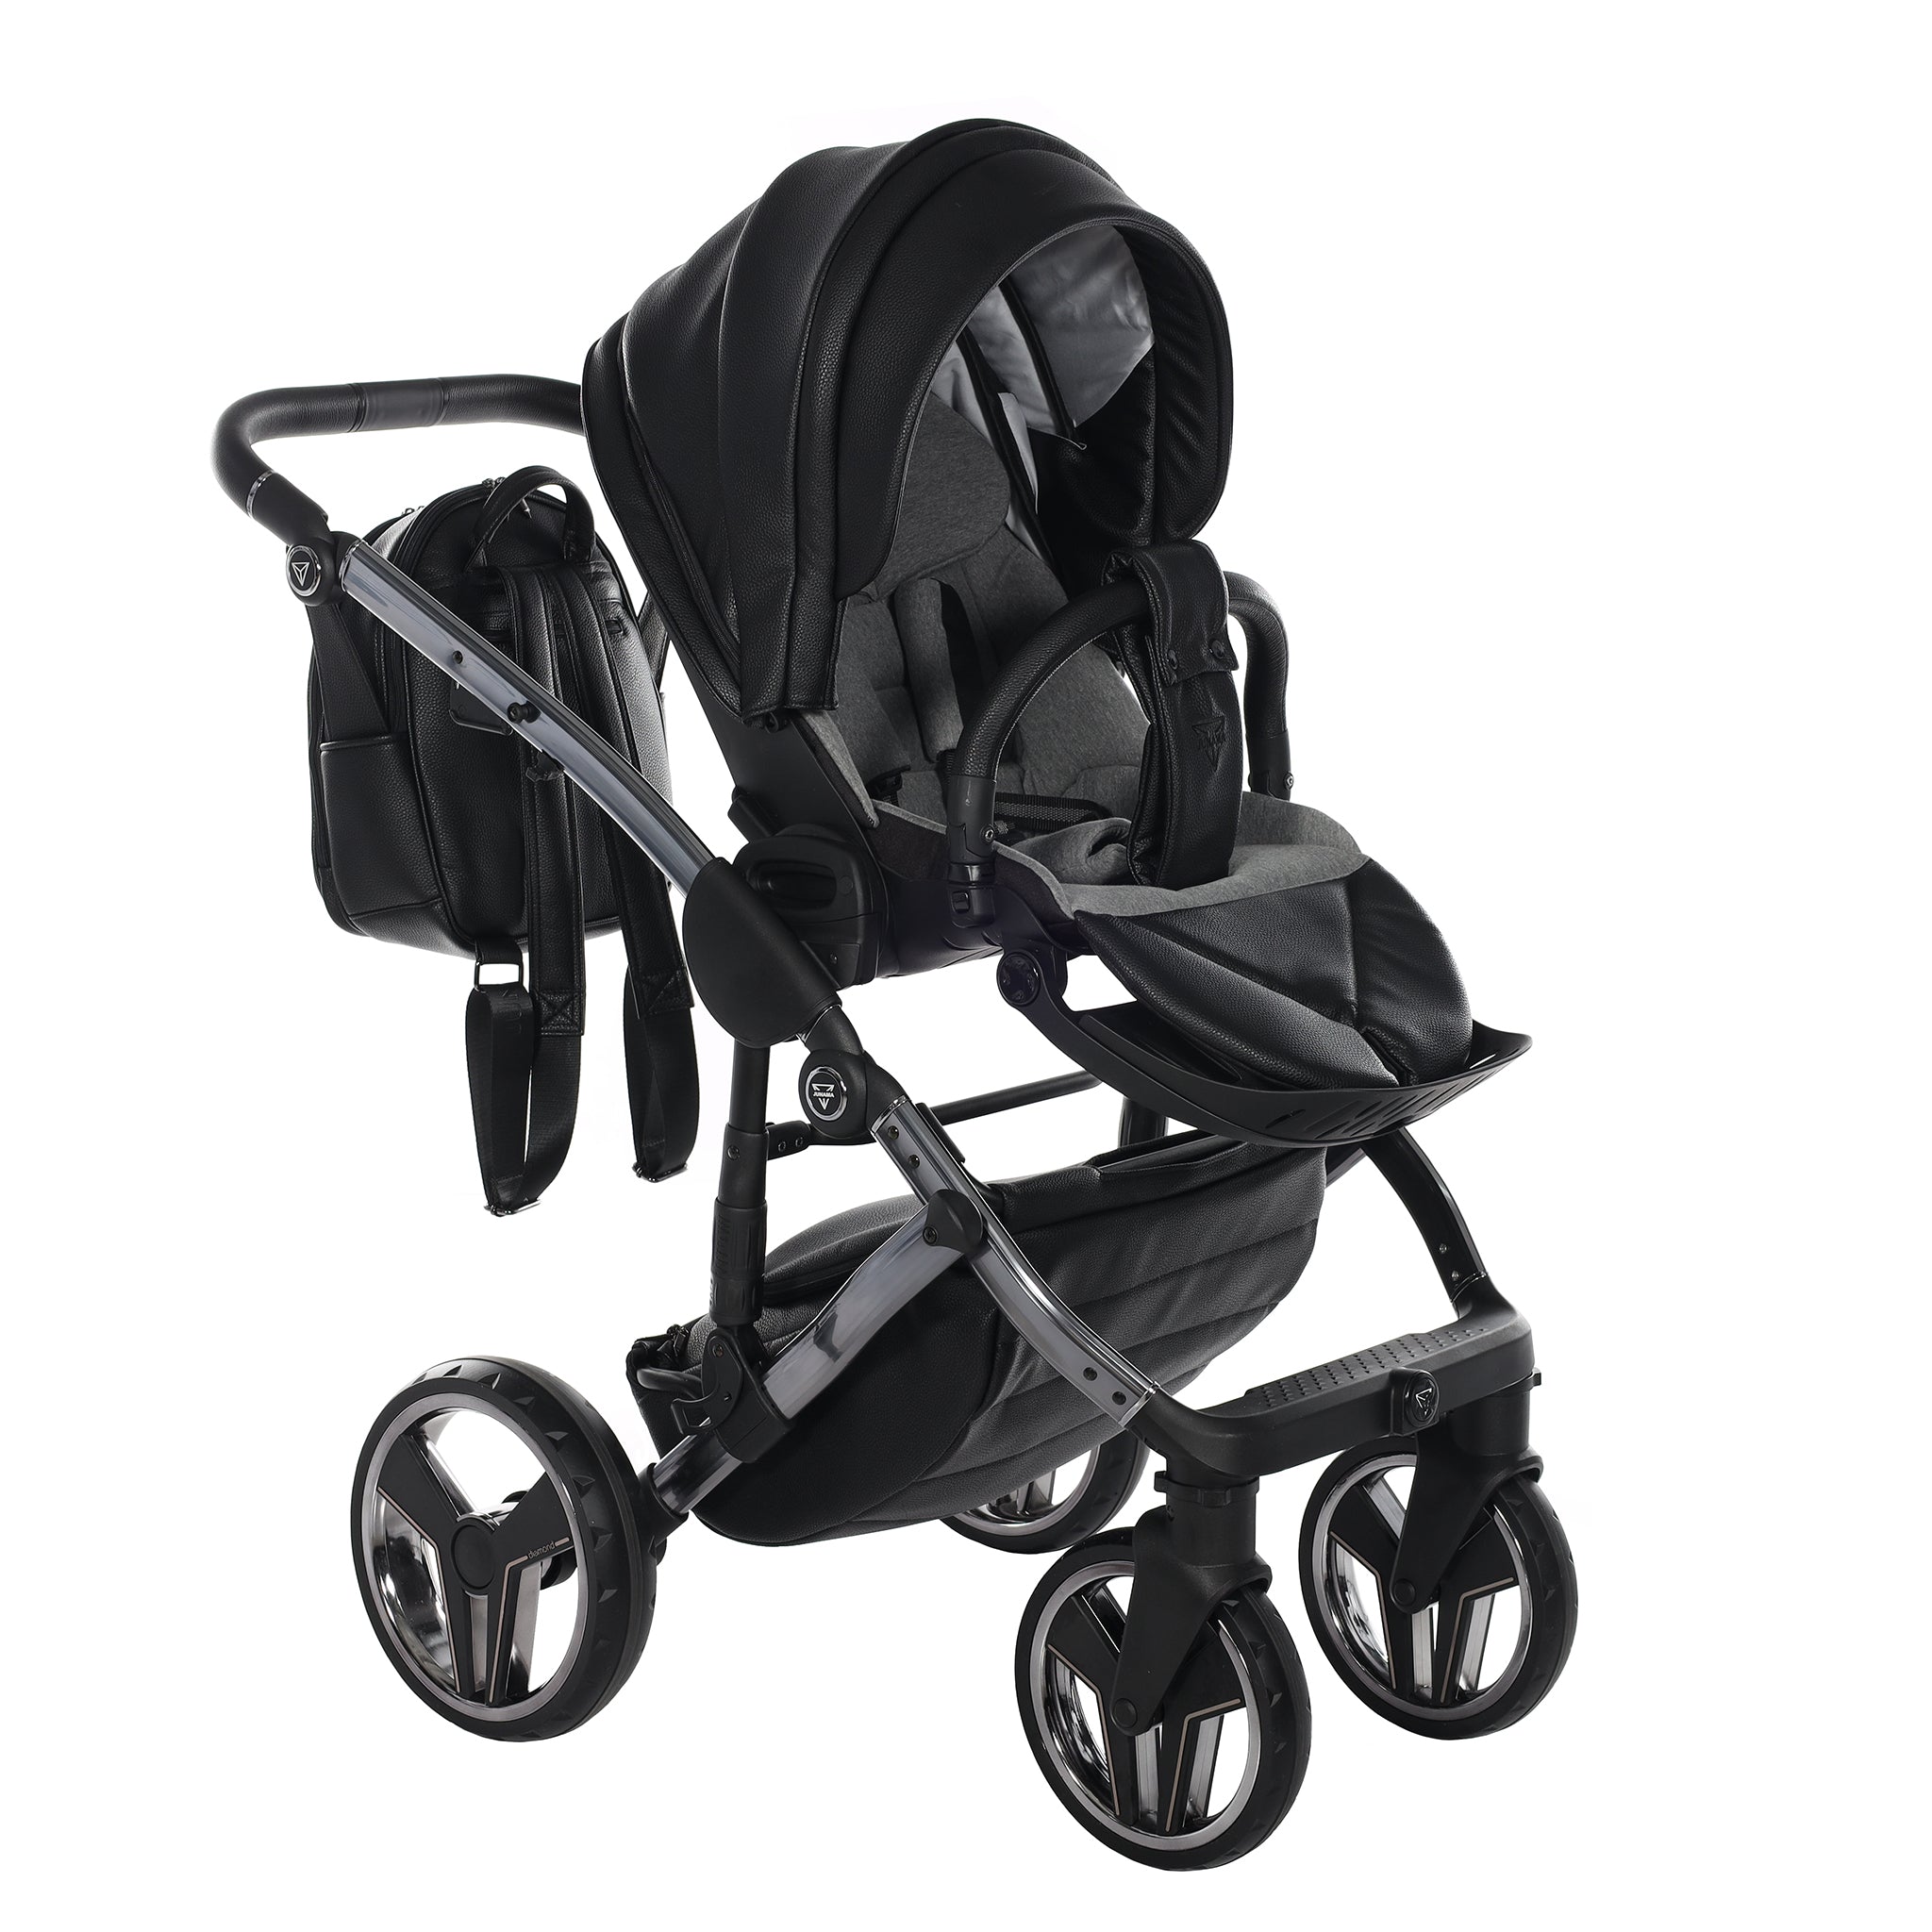 Junama Handcraft, baby prams or stroller 2 in 1 - Black, number: JUNHC04